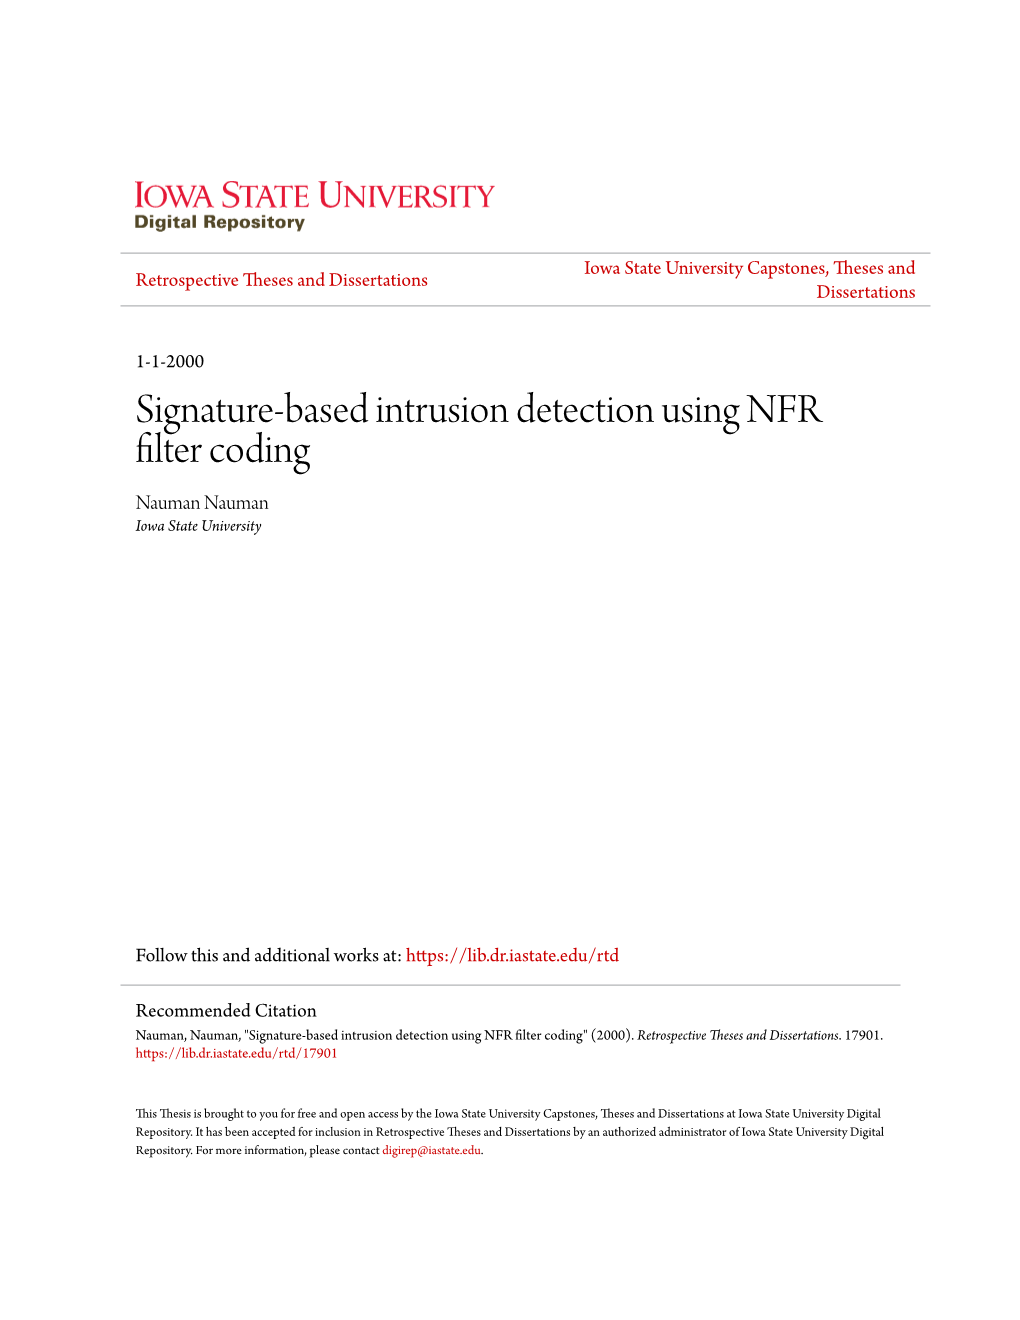 Signature-Based Intrusion Detection Using NFR Filter Coding Nauman Nauman Iowa State University